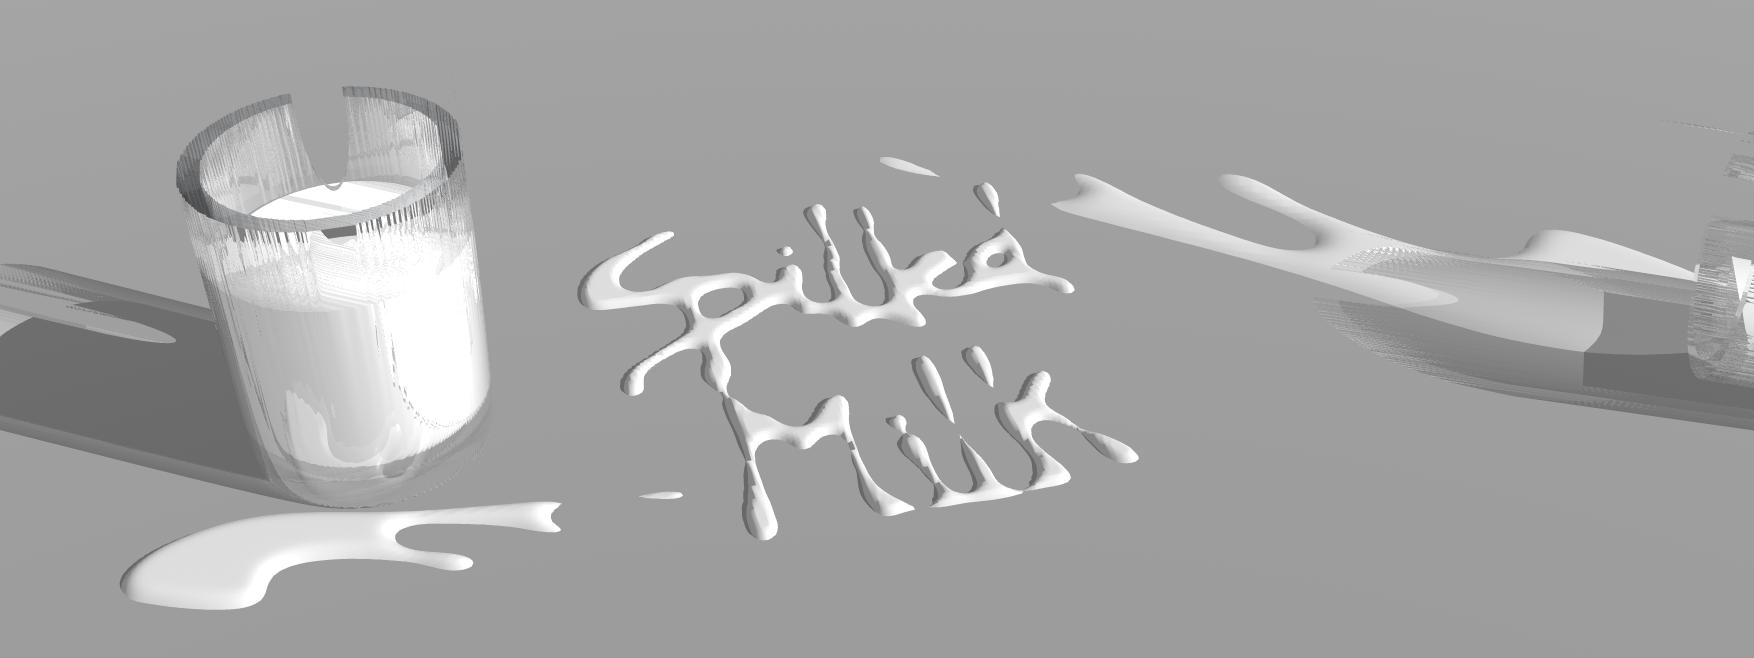 Spilled Milk logo created from spilled milk glass